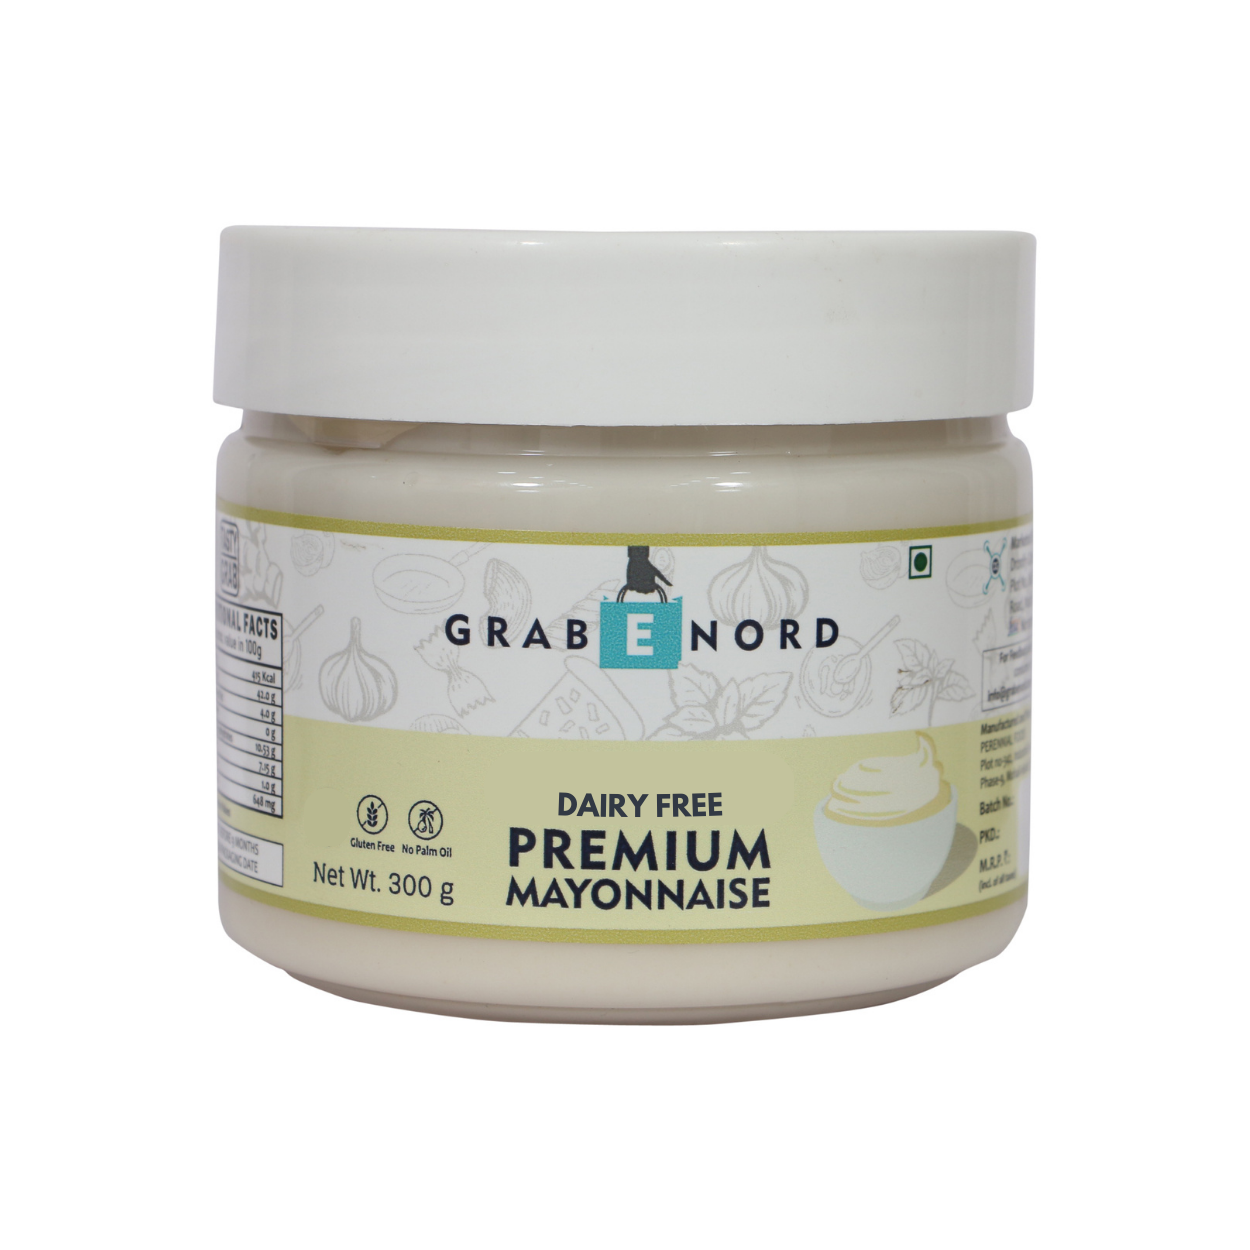 Grabenord Premium Mayonnaise - 300g (Dairy Free, Palm Free, Plant Based)